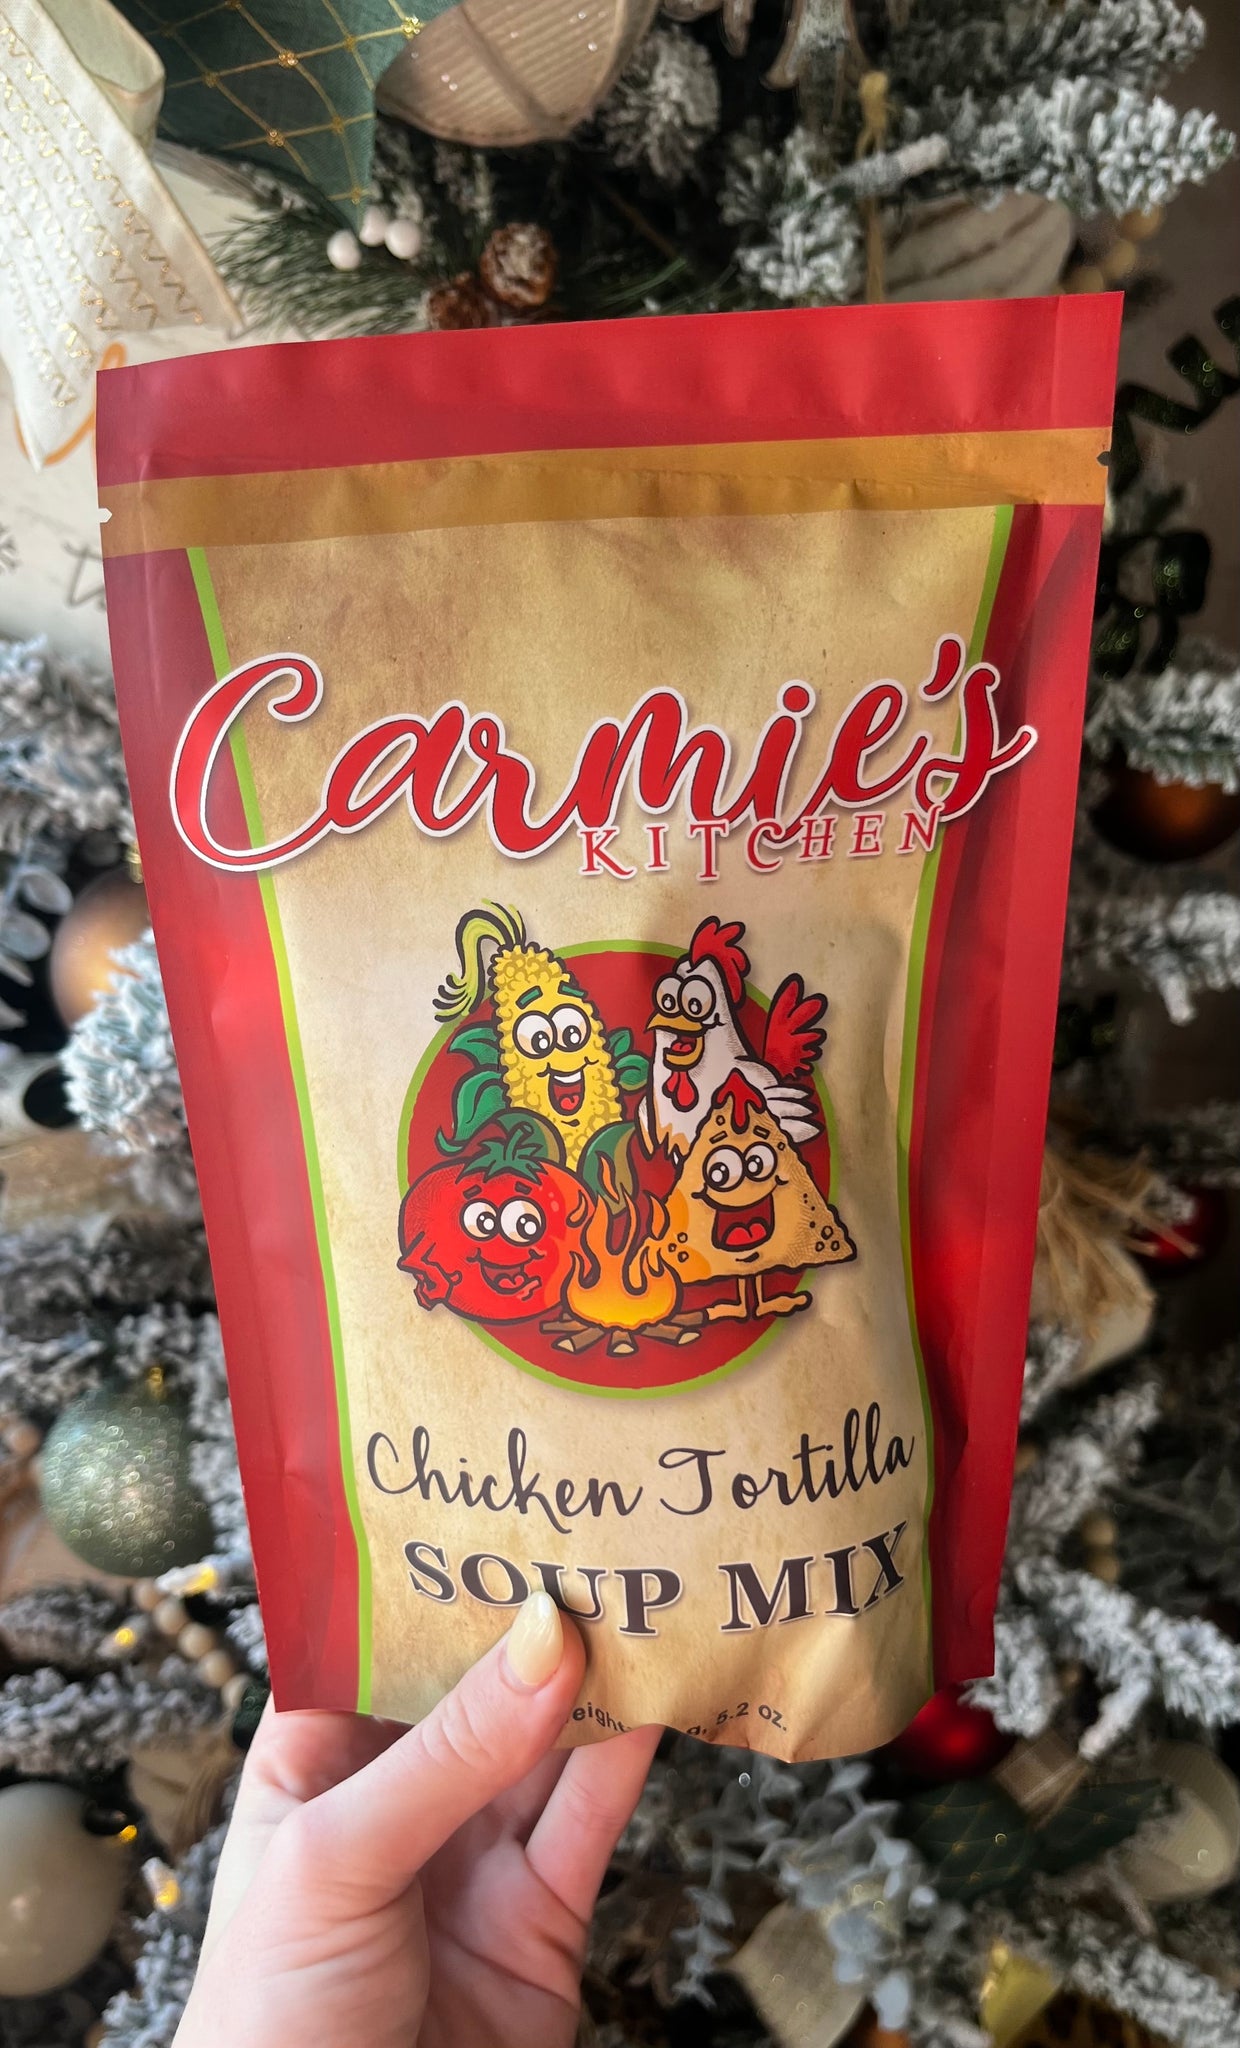 Carmie's Chicken Tortilla Soup Mix